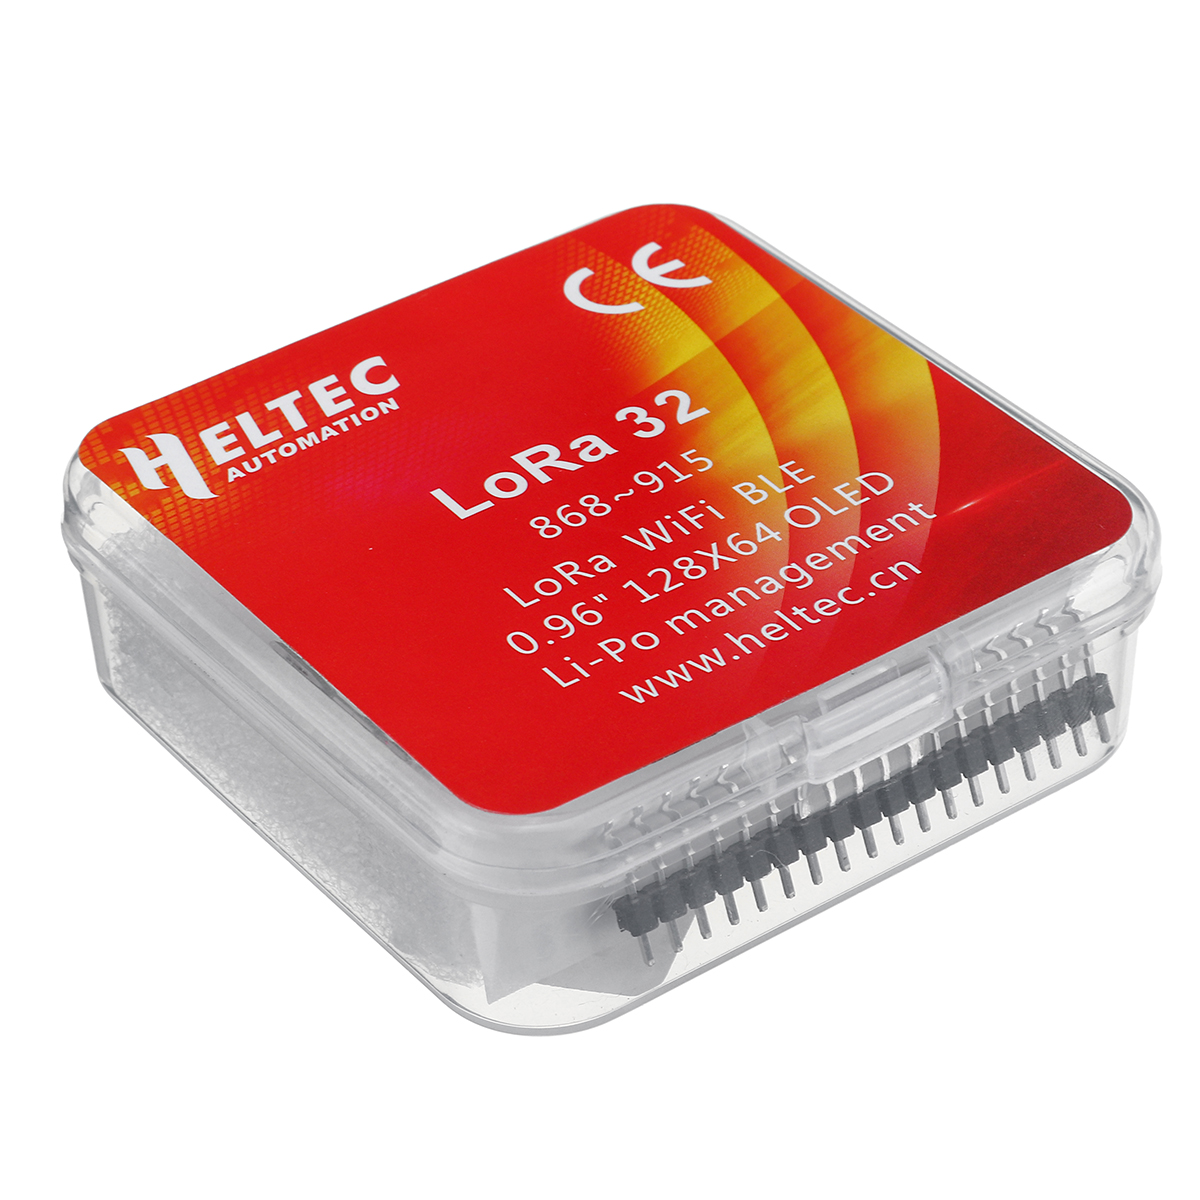 Heltec-Development-Board-SX1278-ESP32-Chip-OLED-WIFI-LoRa-Node-433-470MHz-Upgrade-Version-1639291